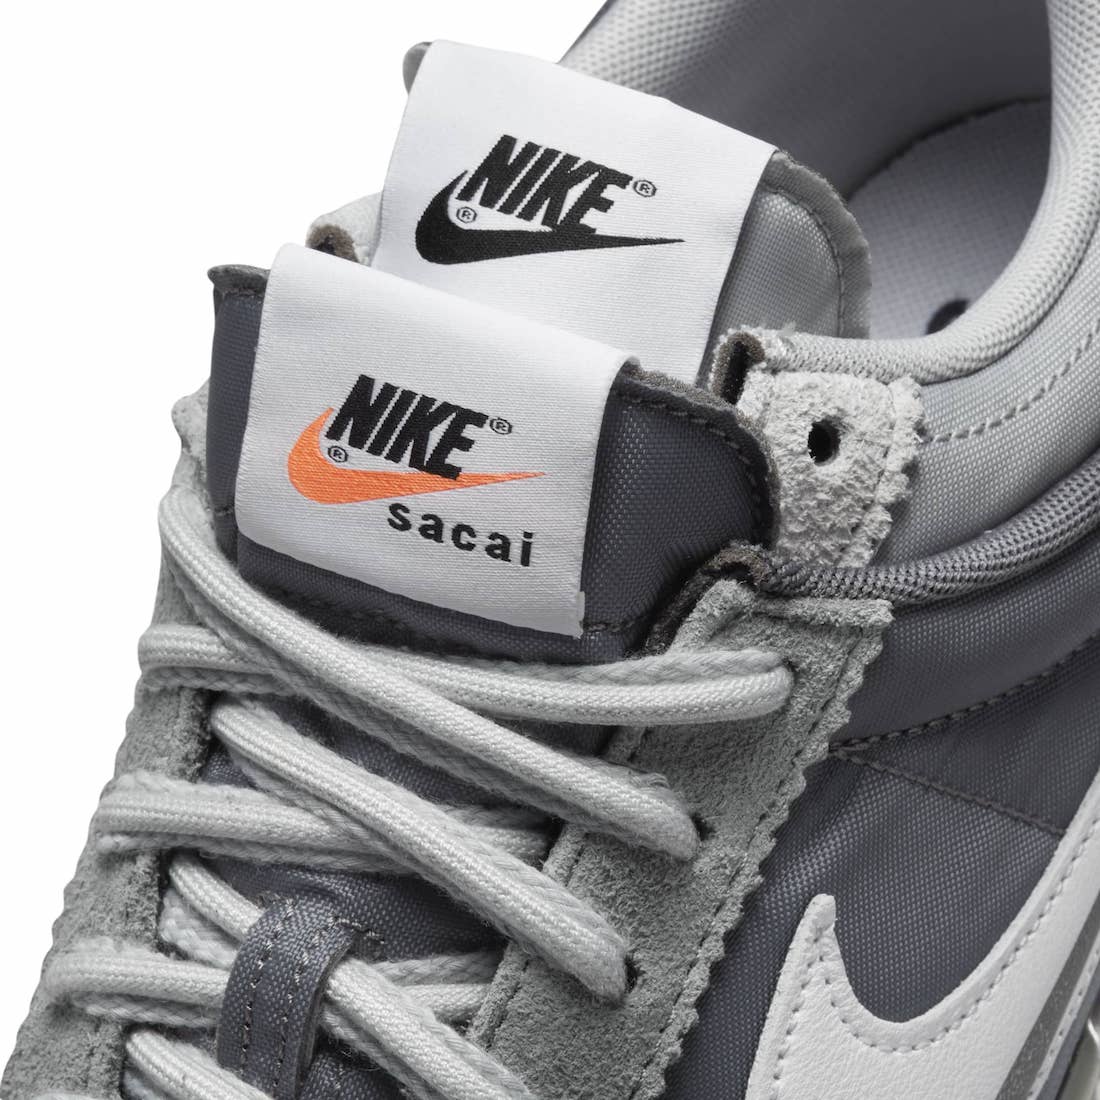 Sacai Nike Cortez Grey DQ0581 001 Release Date 8